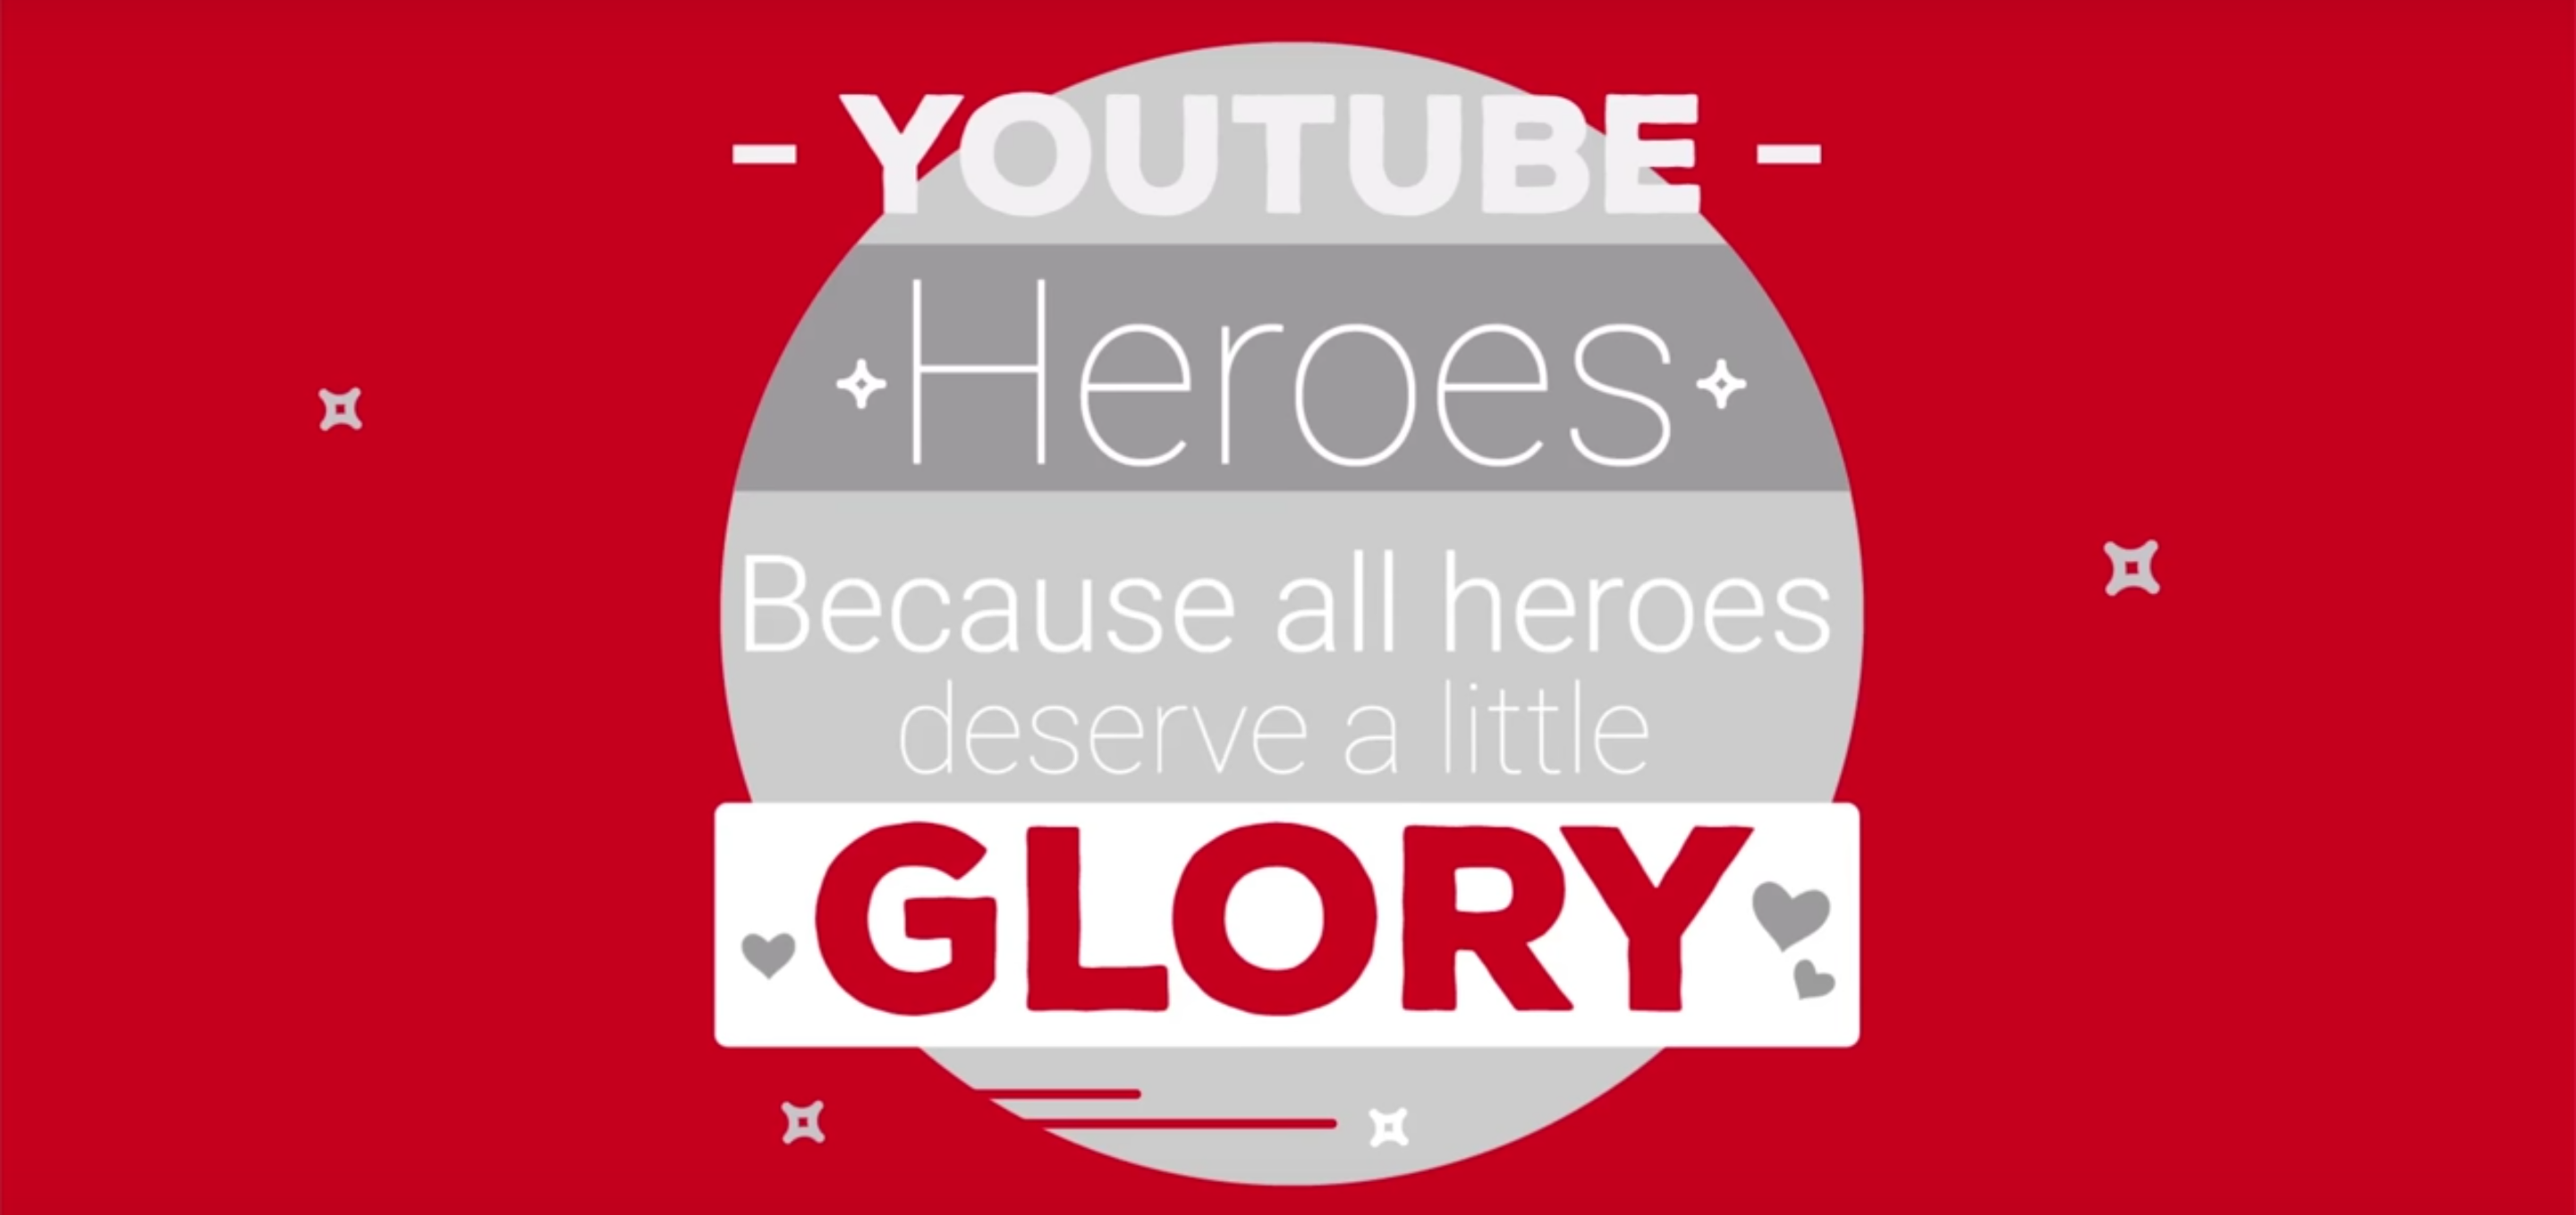 YouTube Heros